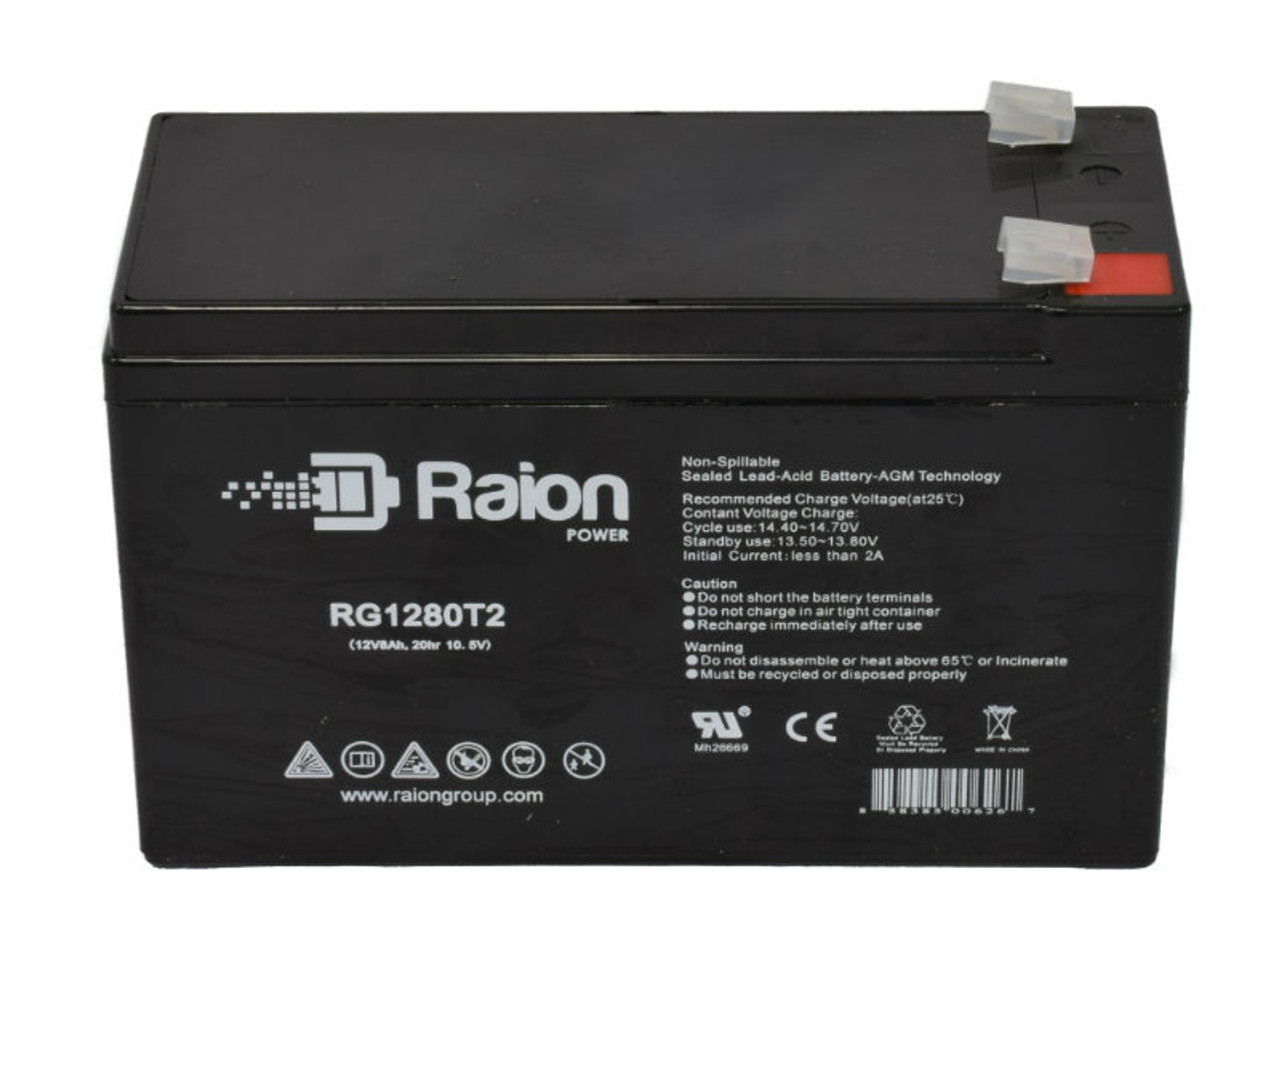 Raion Power RG1280T1 Replacement SLA Battery for Anaconda EN-900 25 Million Candle Power Spotlight